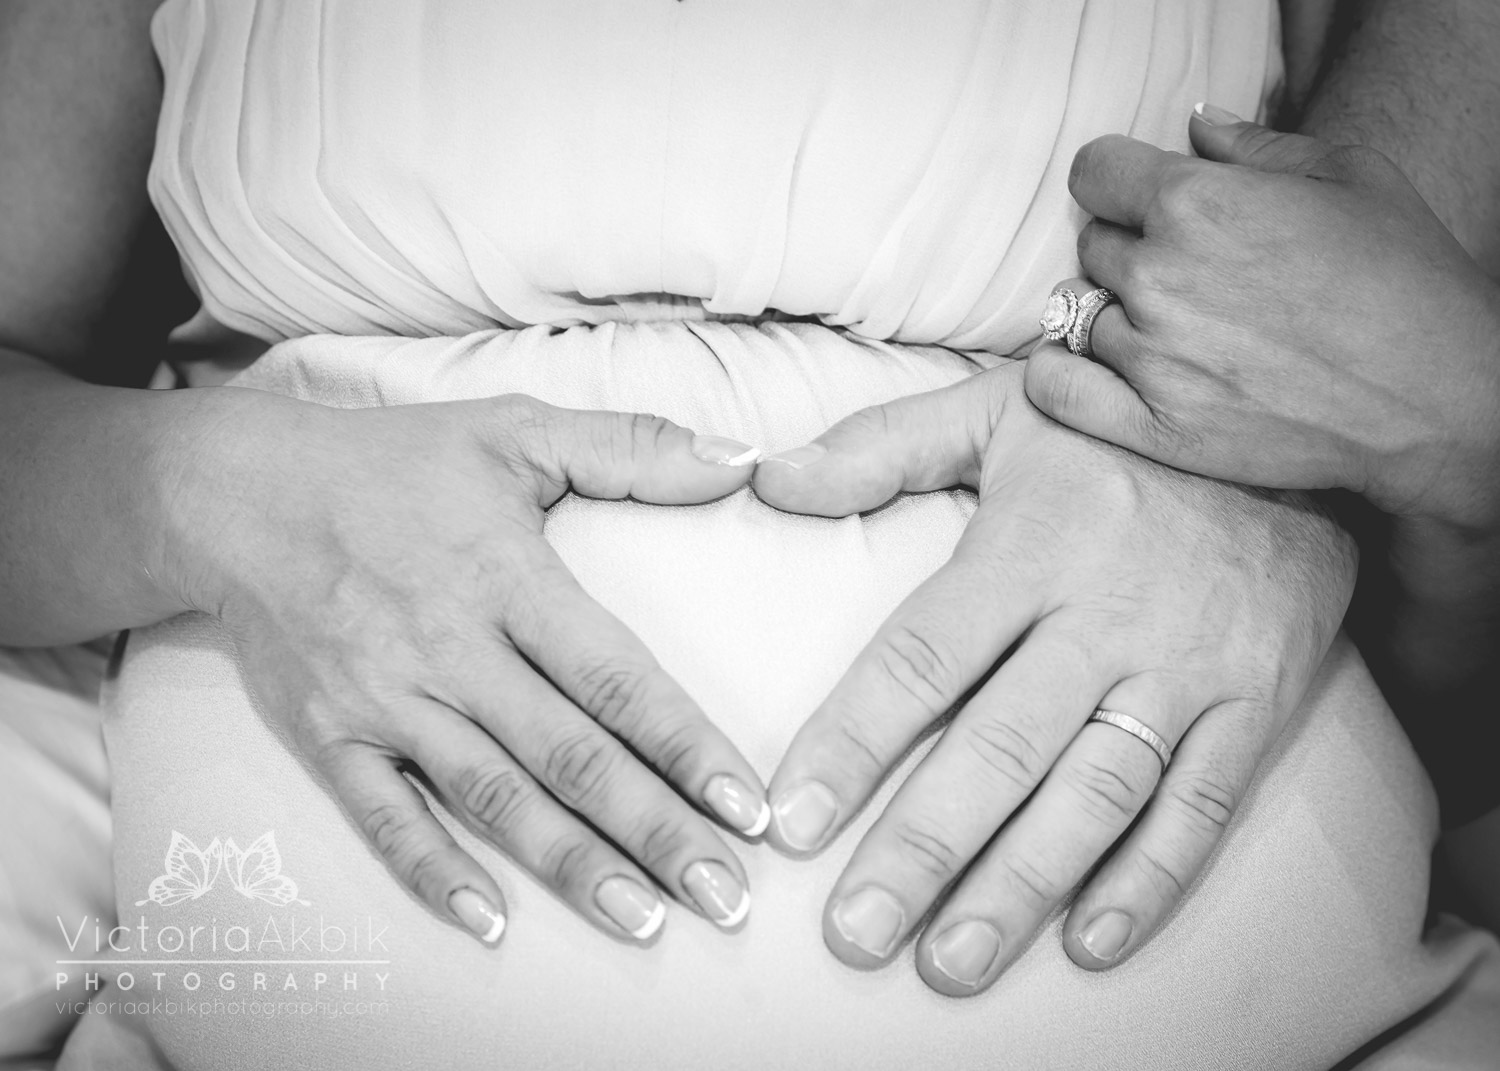 Home Maternity Shoot | Abu Dhabi Lifestyle Family Photography » Victoria Akbik Photography